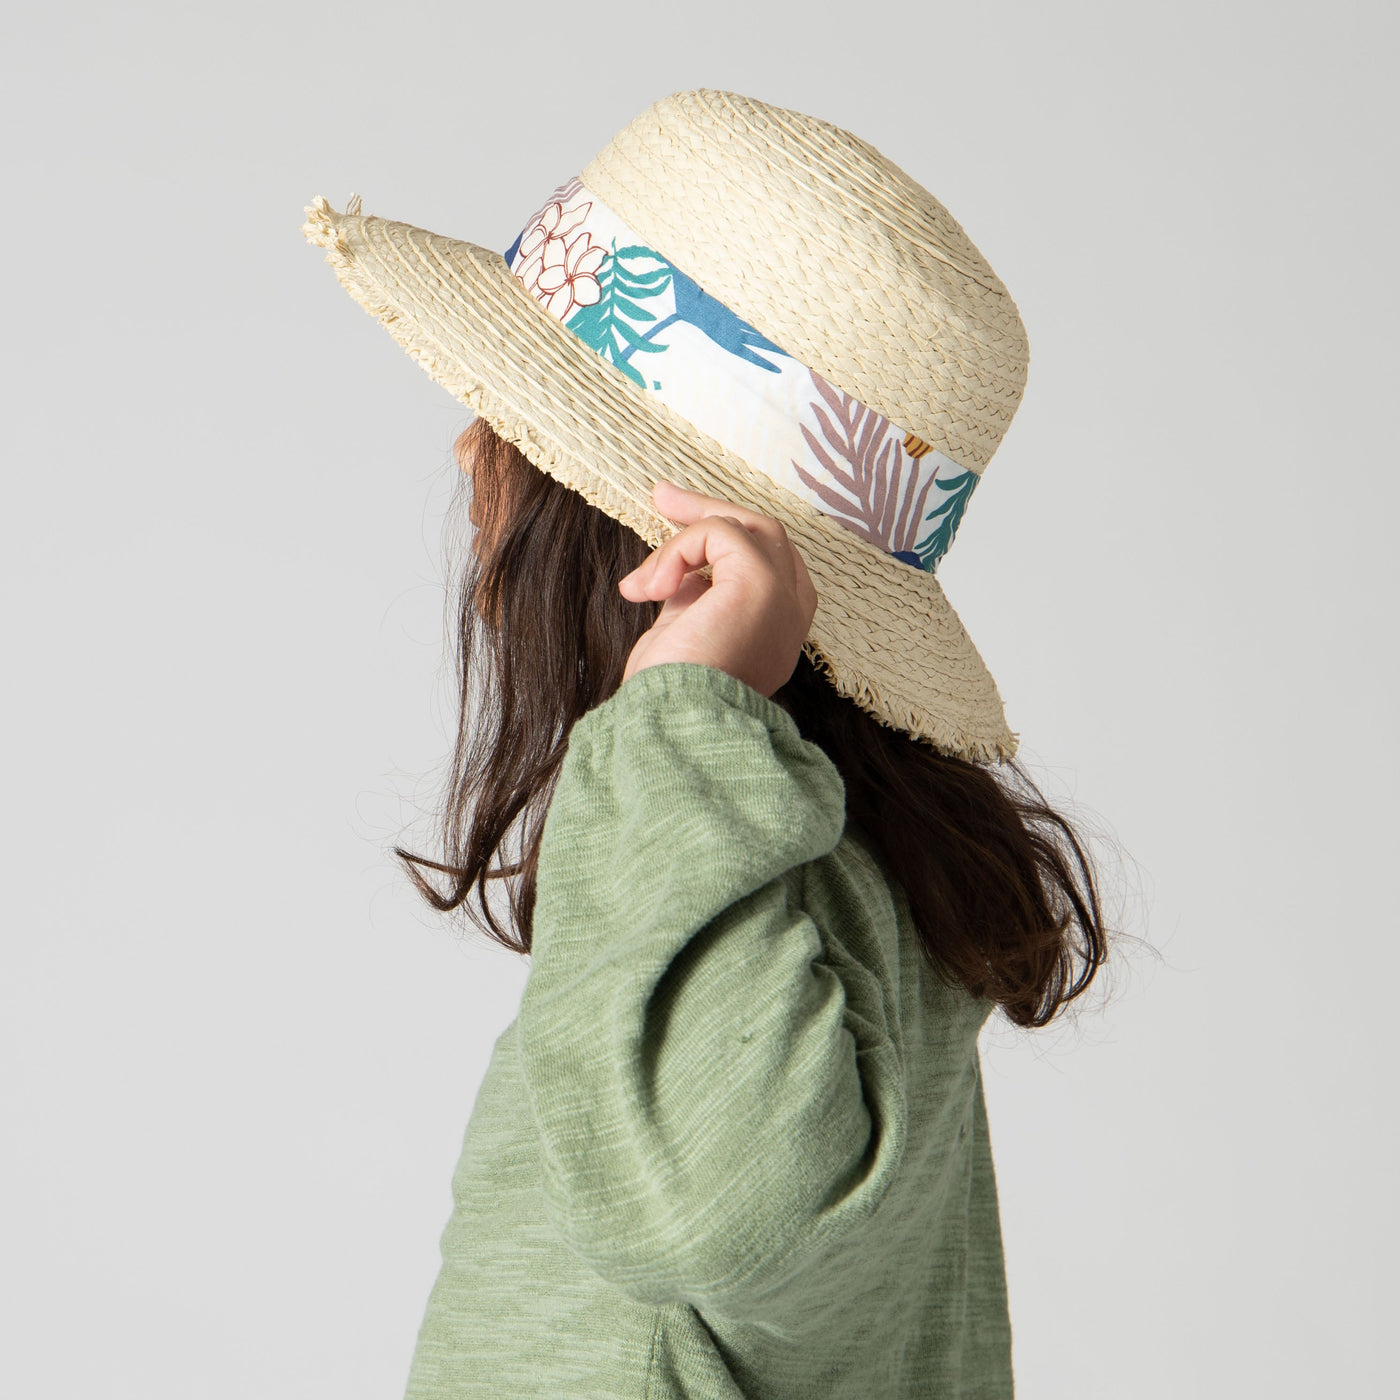 FLOPPY - 5-7 Year Old Kid Paperbraid Floppy Sun Hat